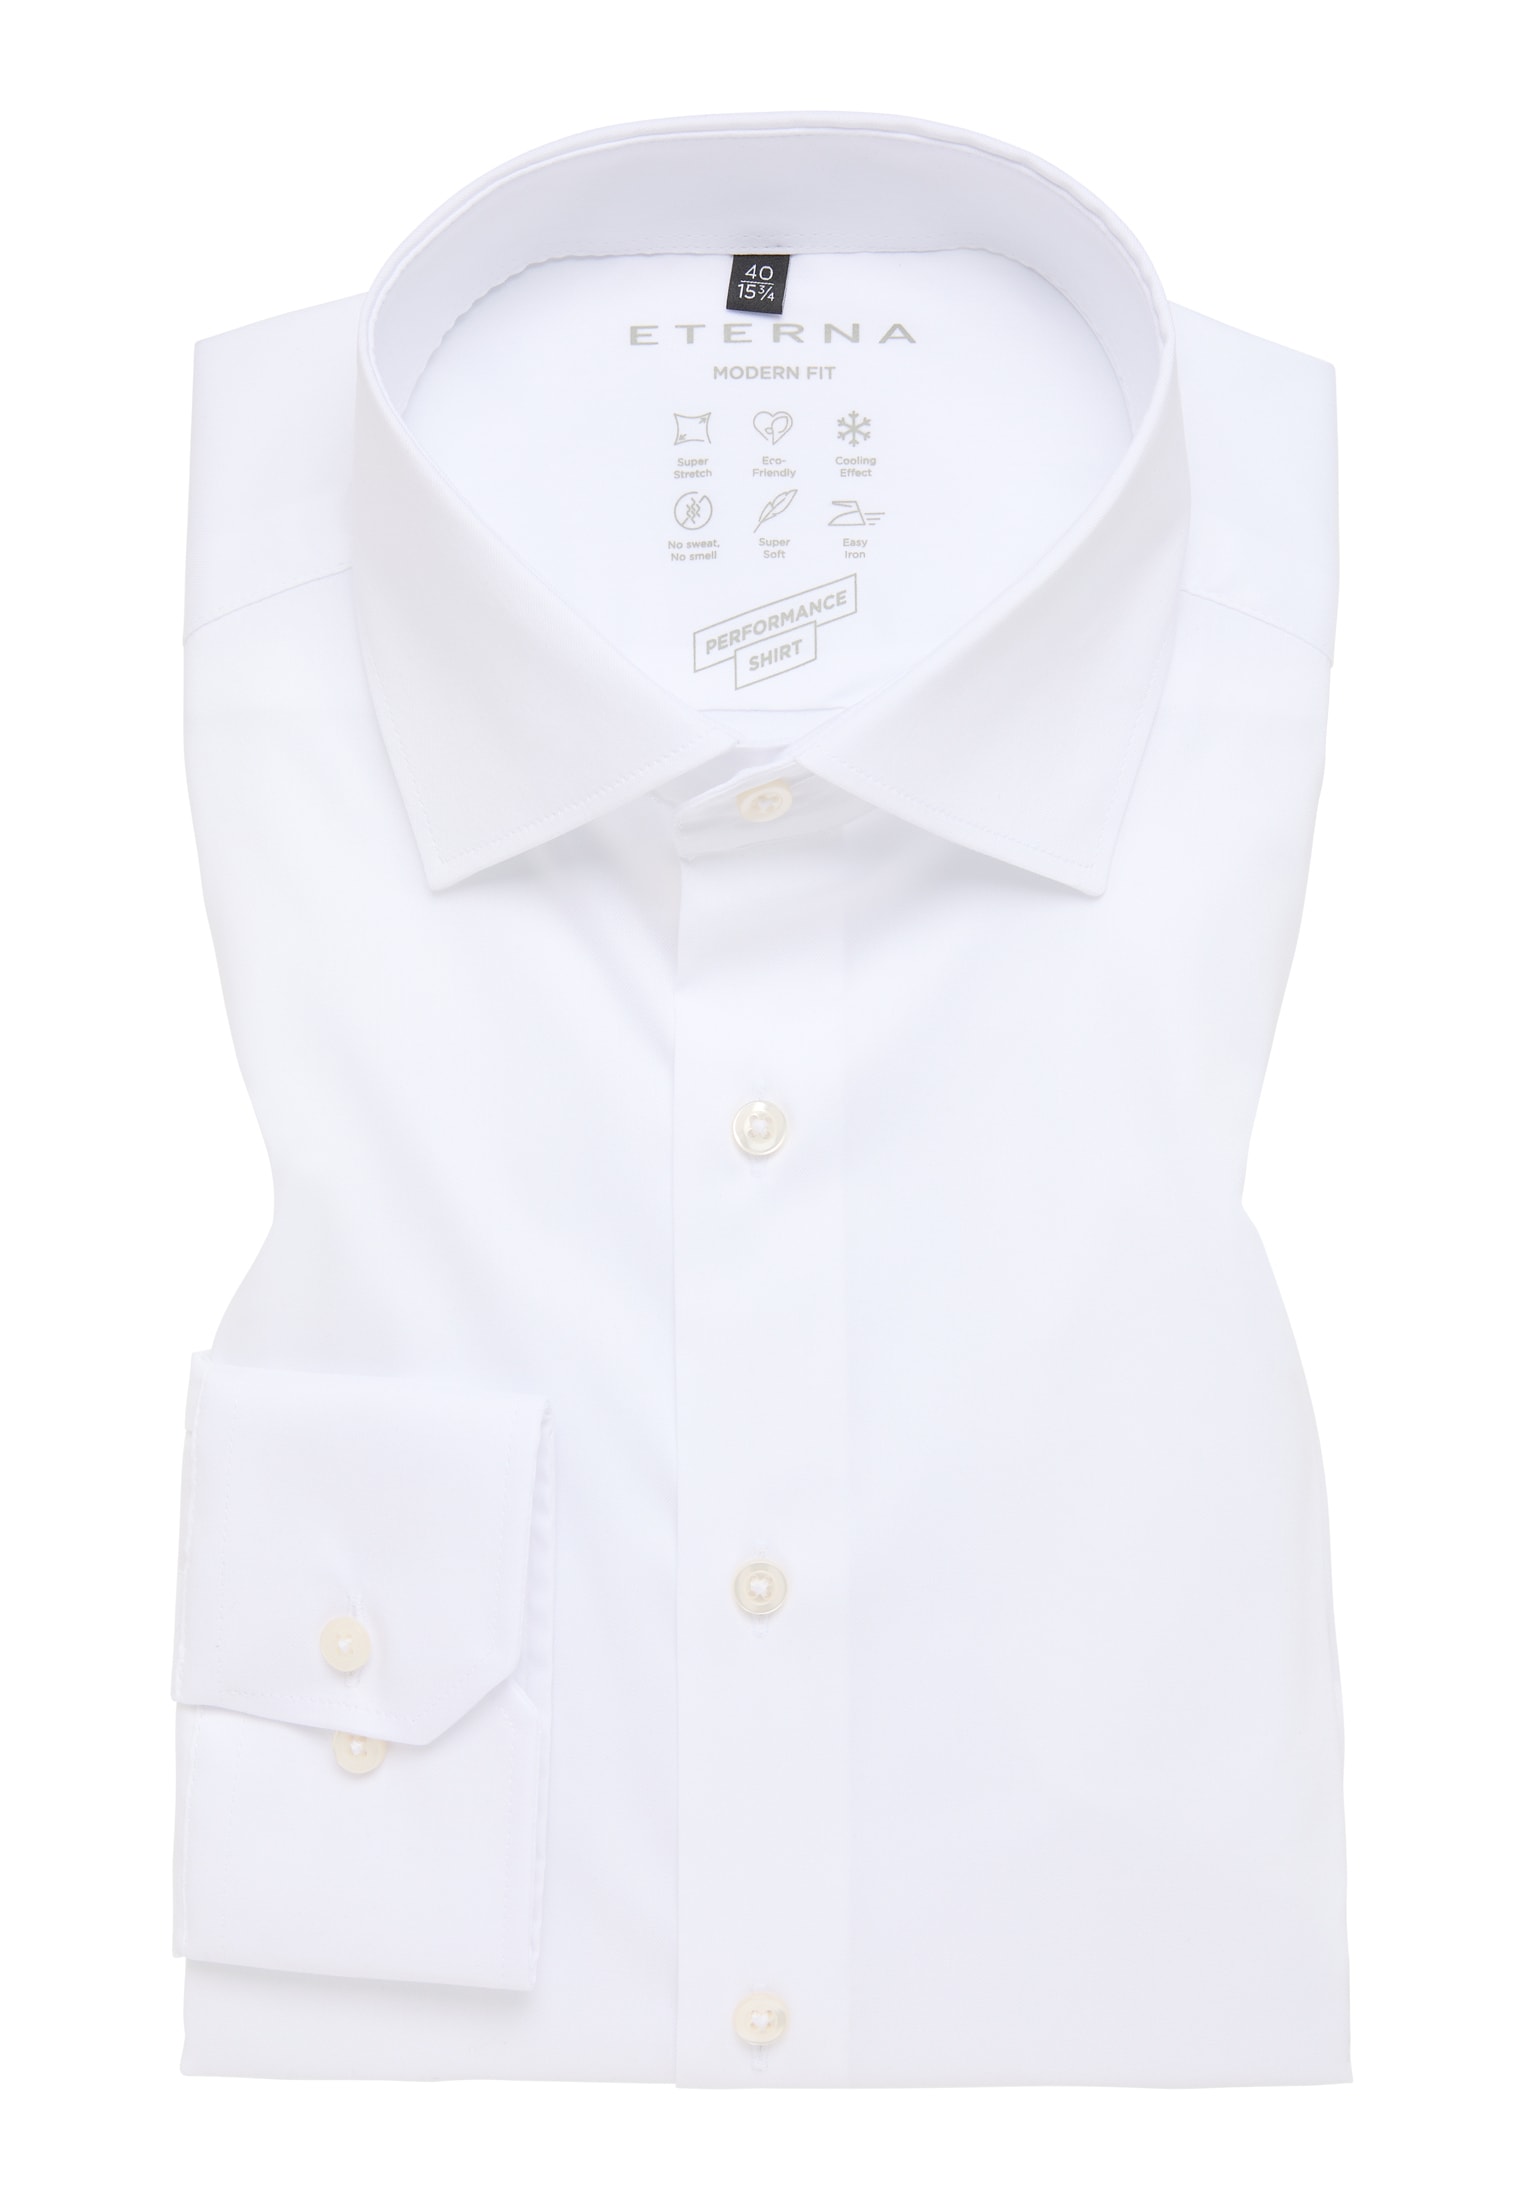 MODERN FIT Performance Shirt weiß 1SH02224-00-01-40-1/1 | | 40 | weiß in Langarm | unifarben